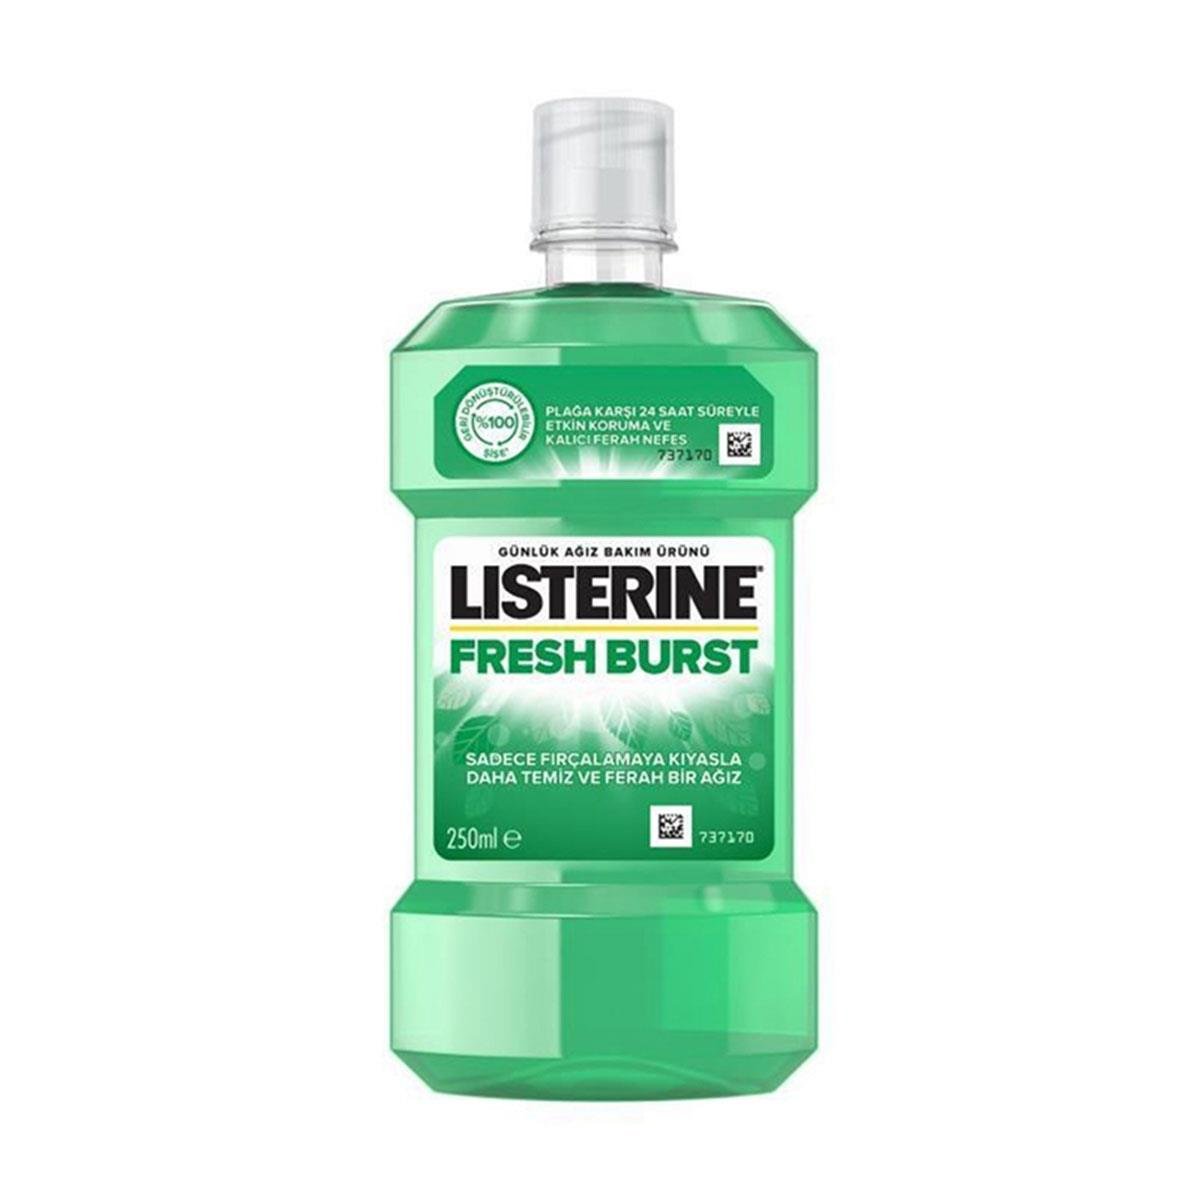 Listerine Fresh Burst 250 ml - Daffne